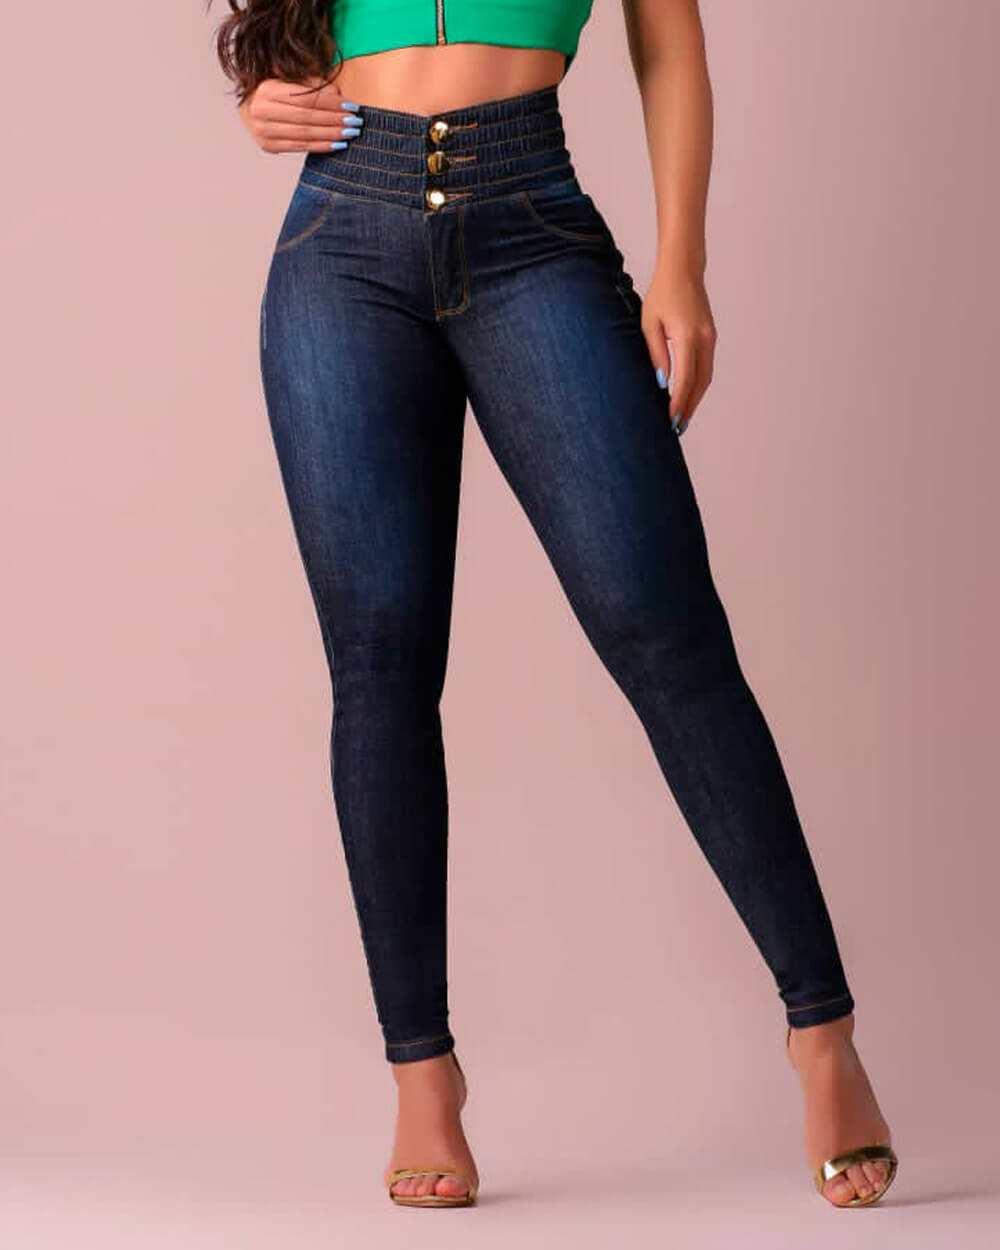 Sofia - Modelerende Skinny Jeans met Tailleband